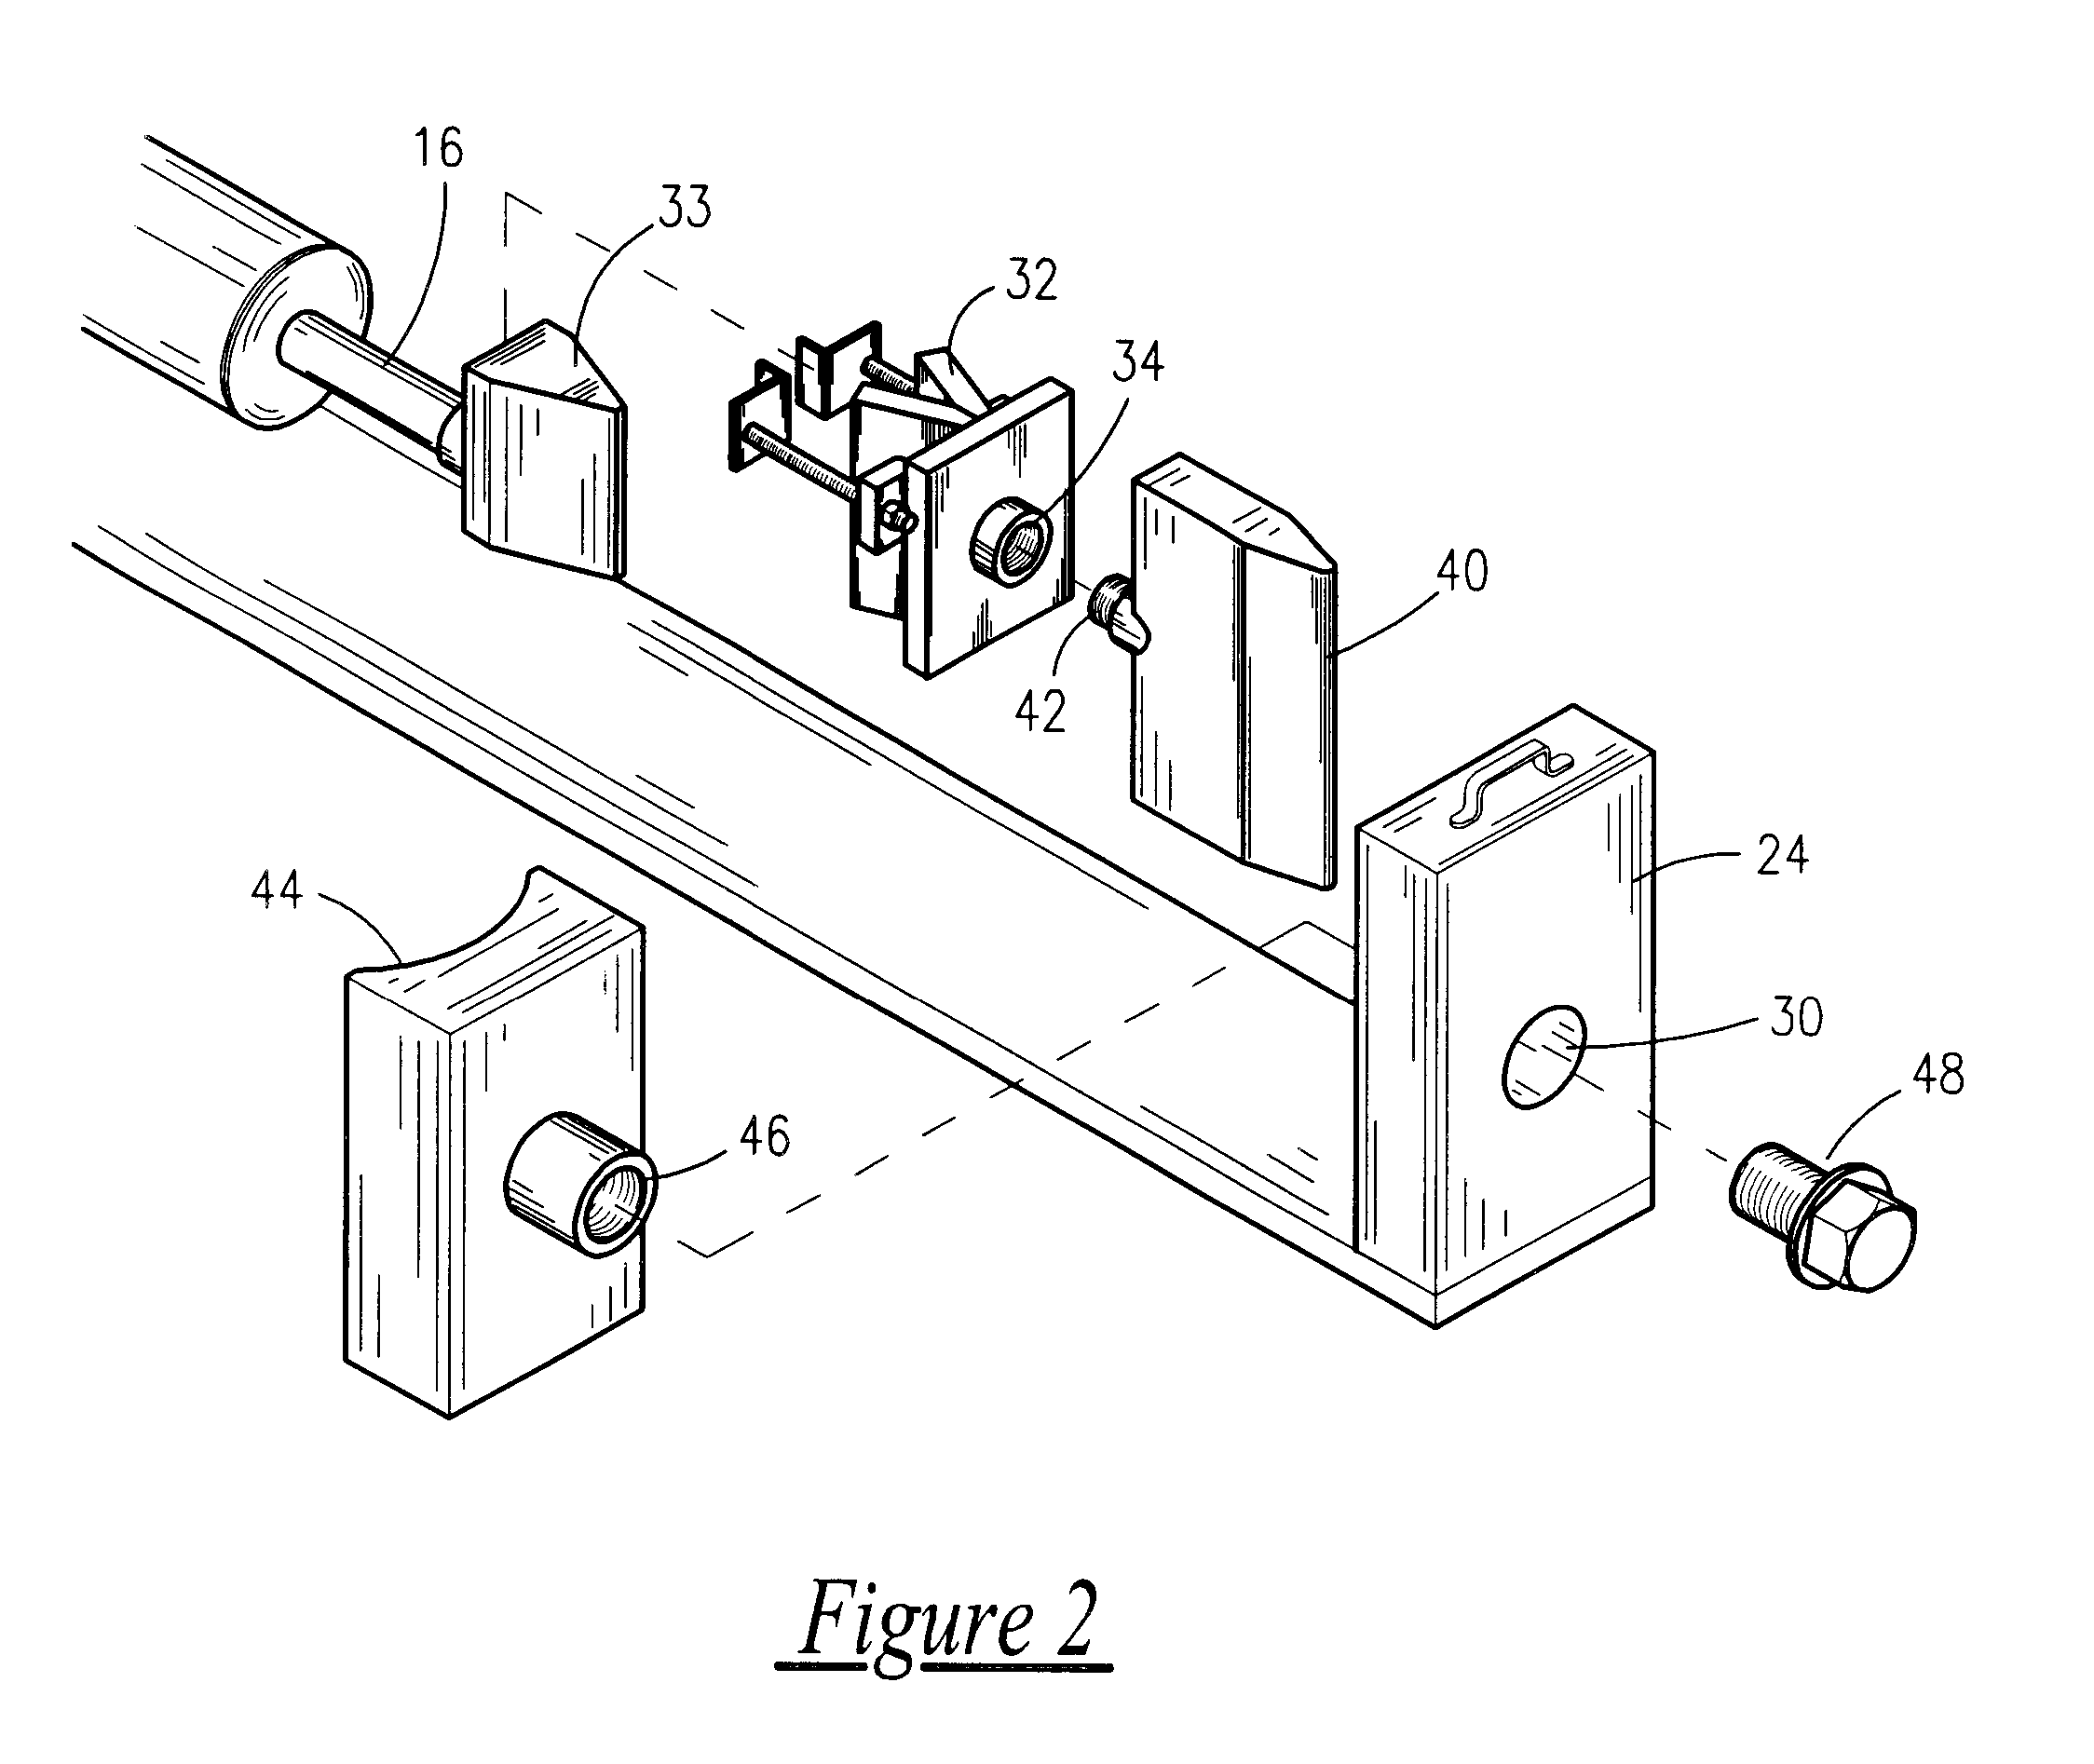 Multi-purpose hydraulic press, metal bending, and log splitting apparatus